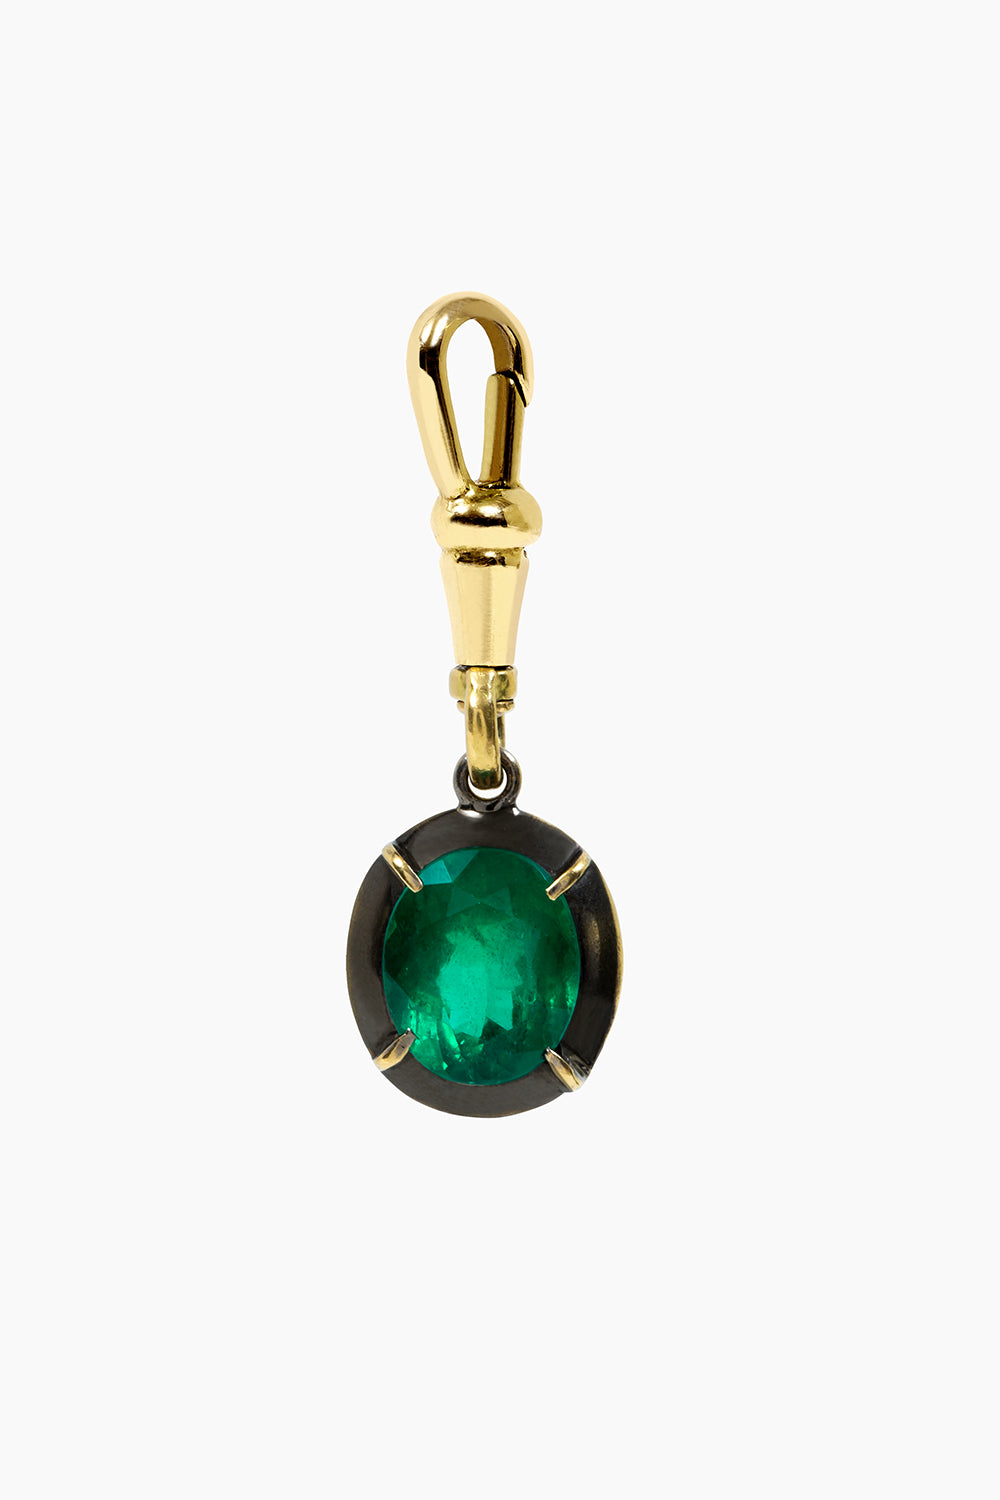 Emerald clasp 2.92ct